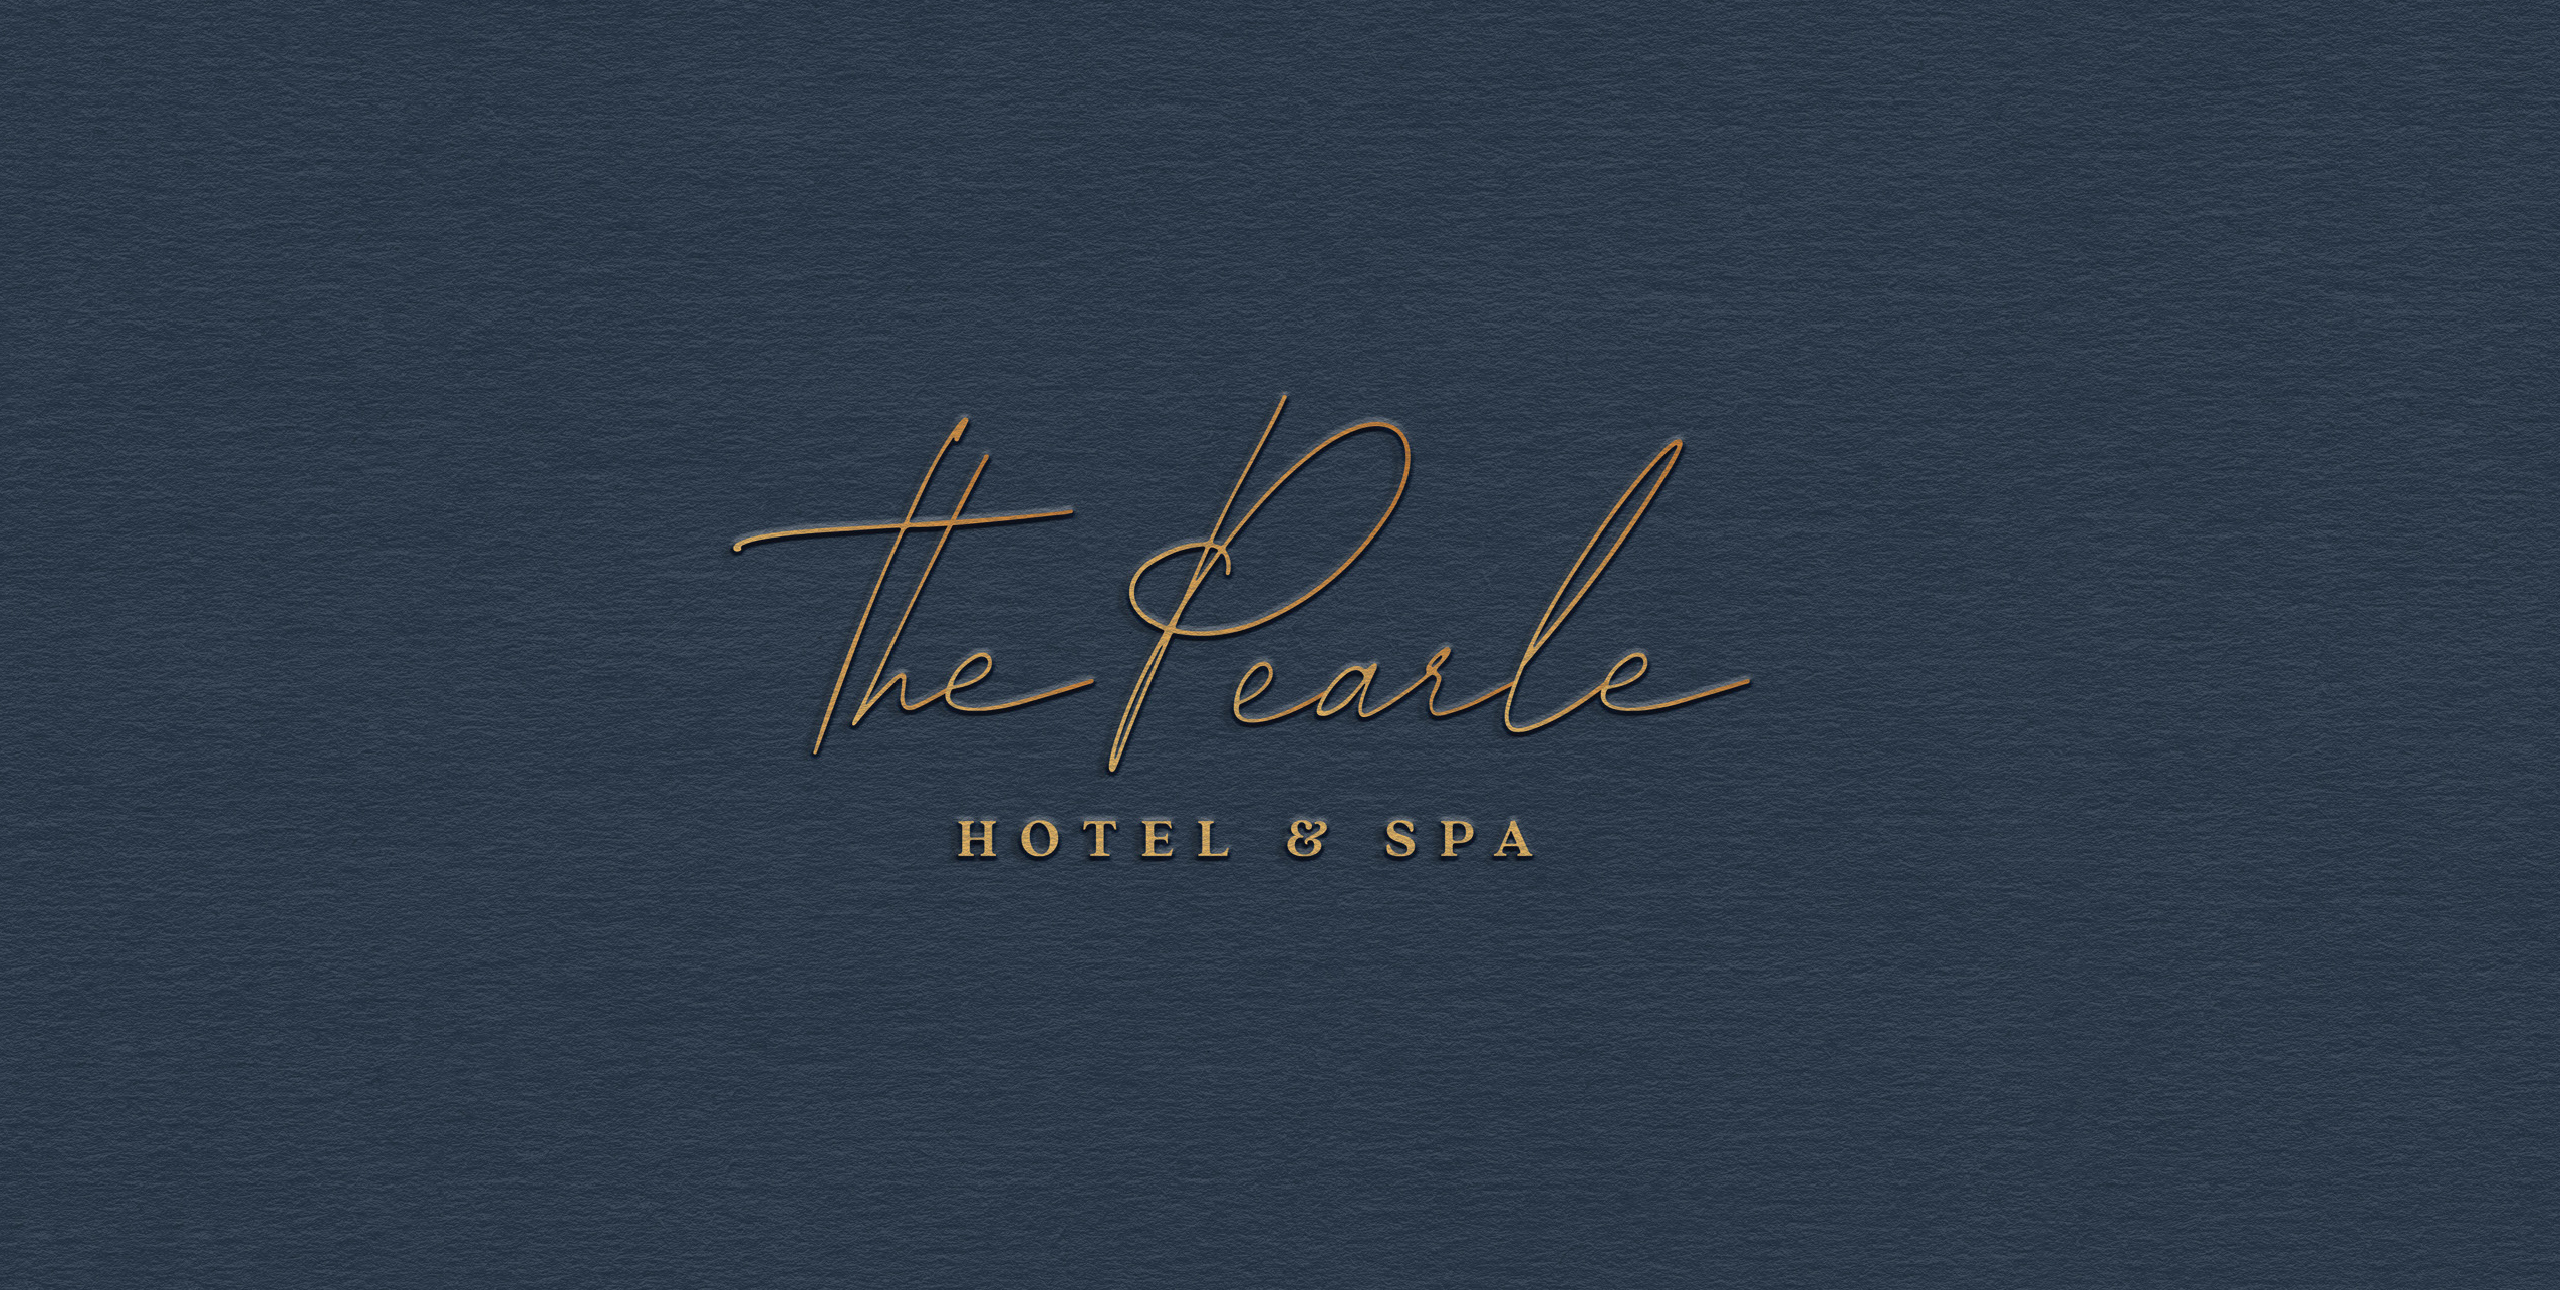 The Pearle Hotel & Spa brand design